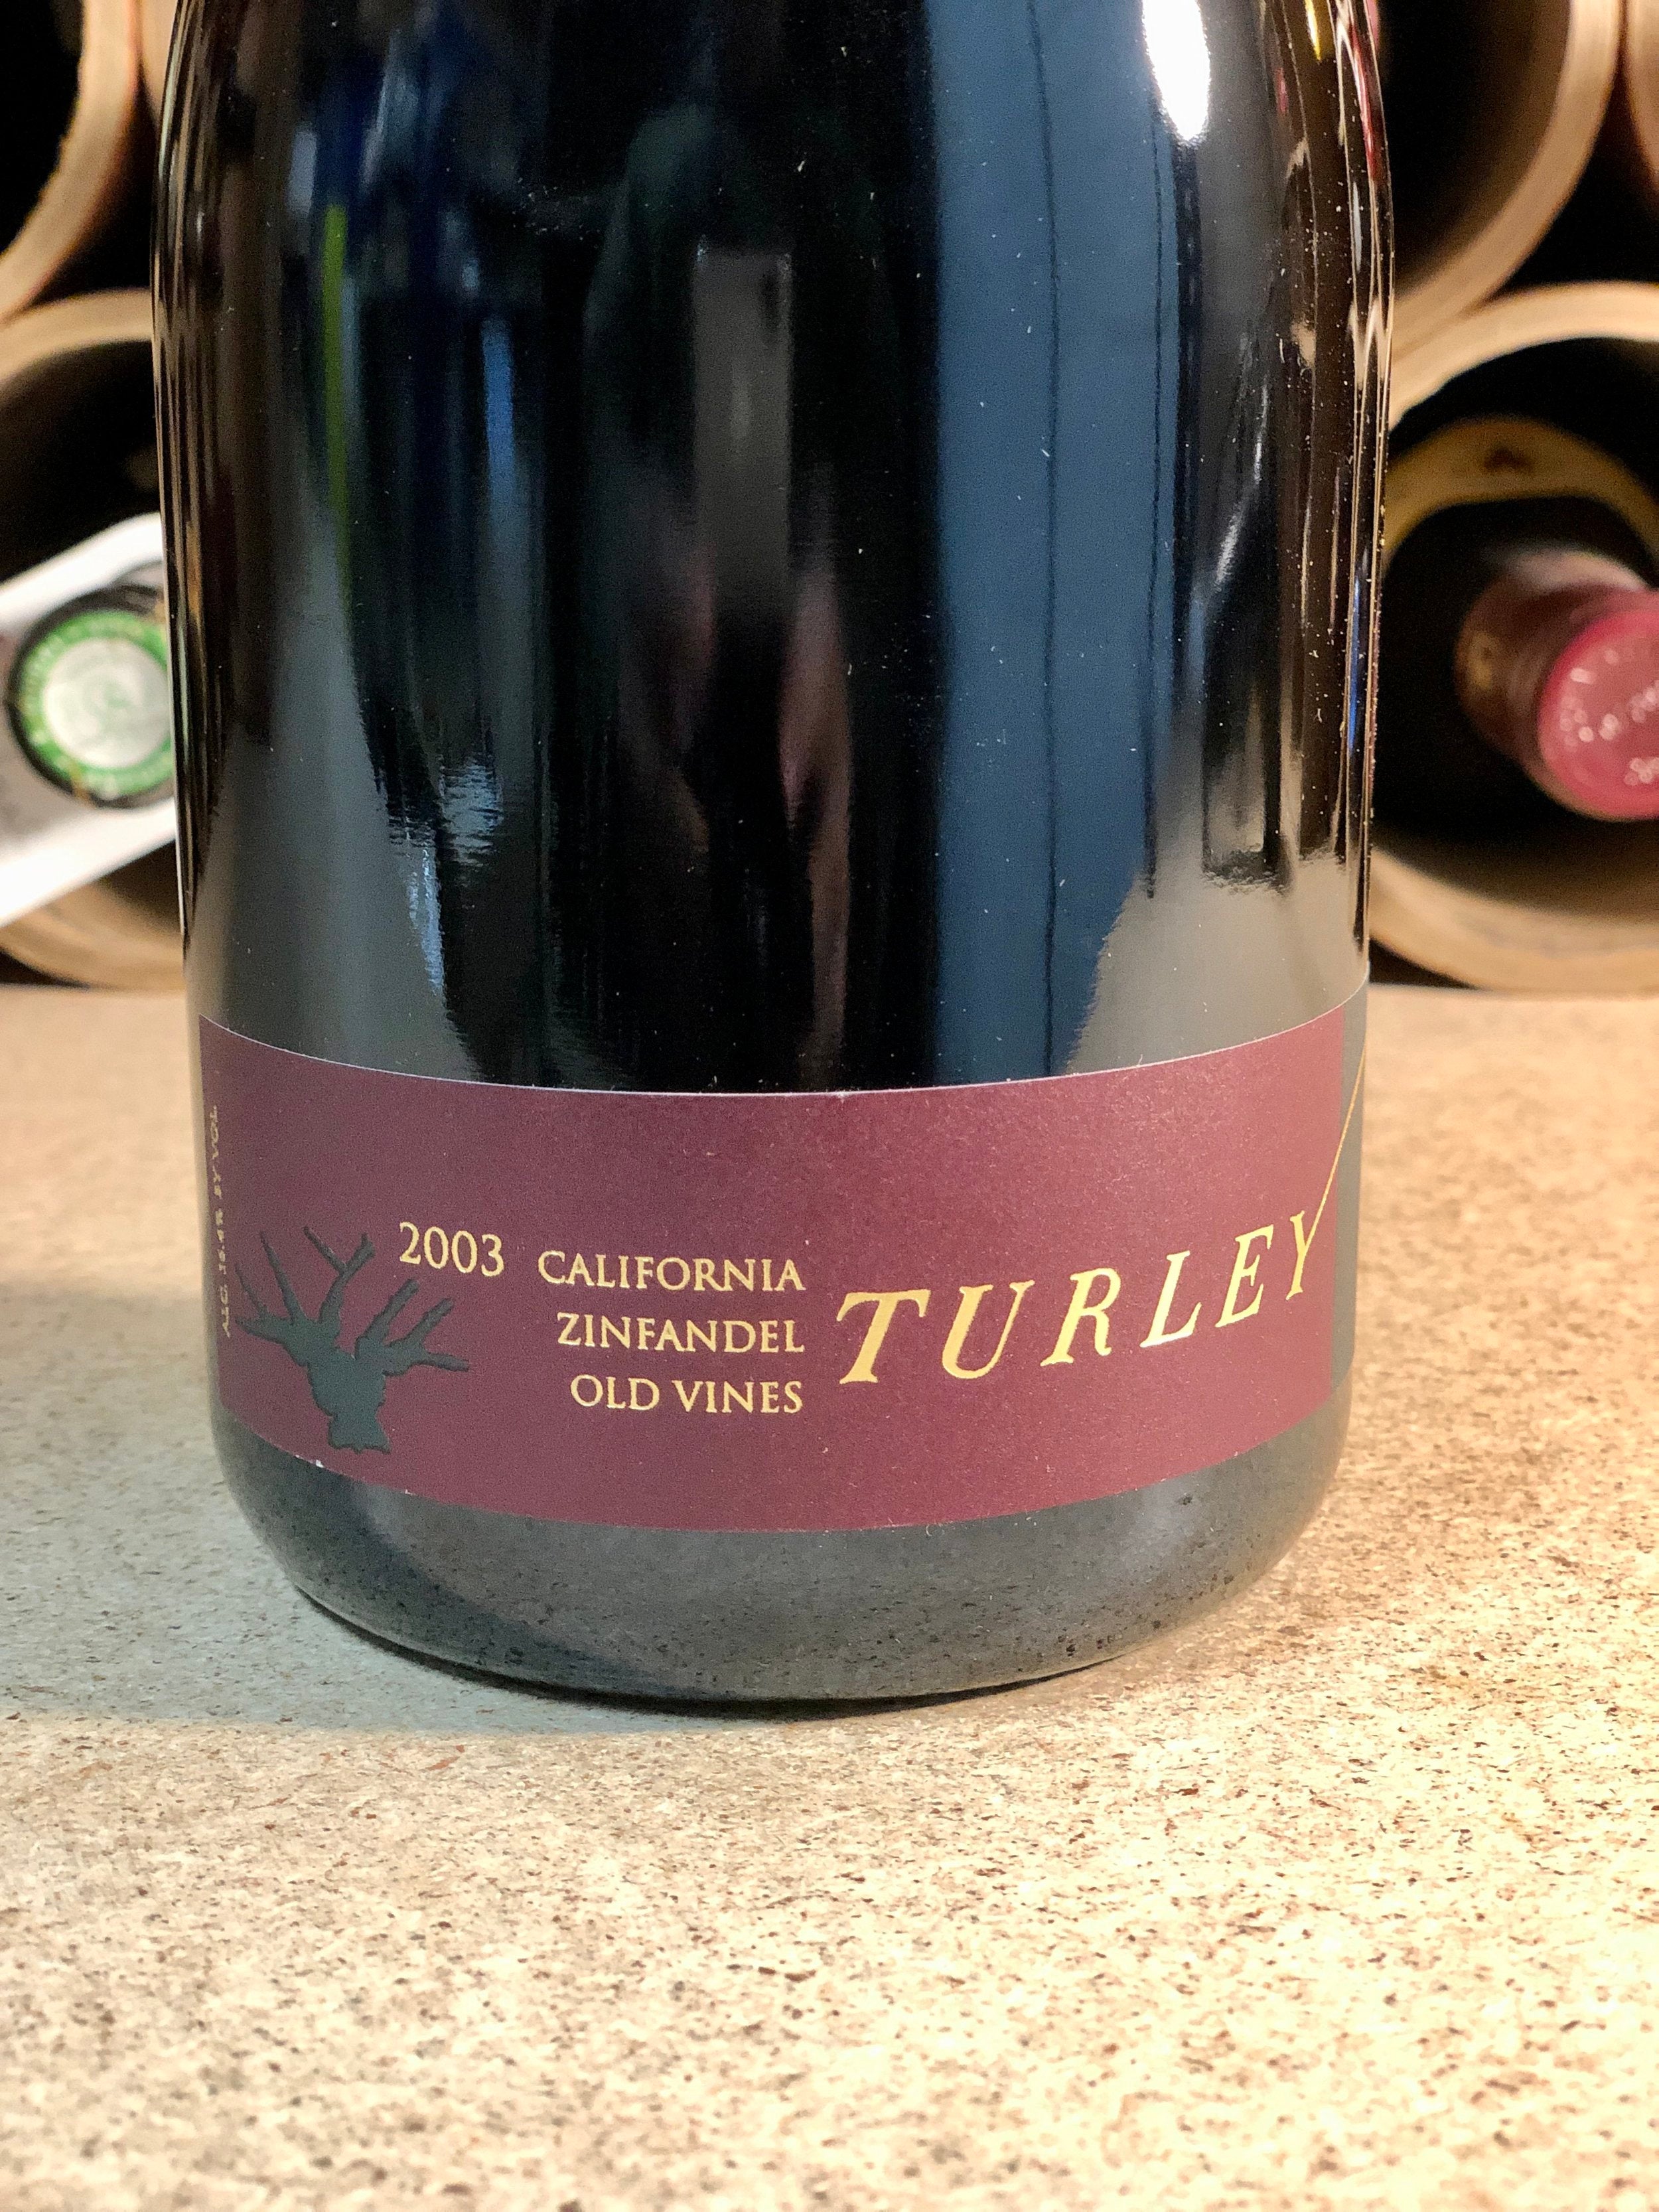 Turley, Old Vines, Zinfandel 2003